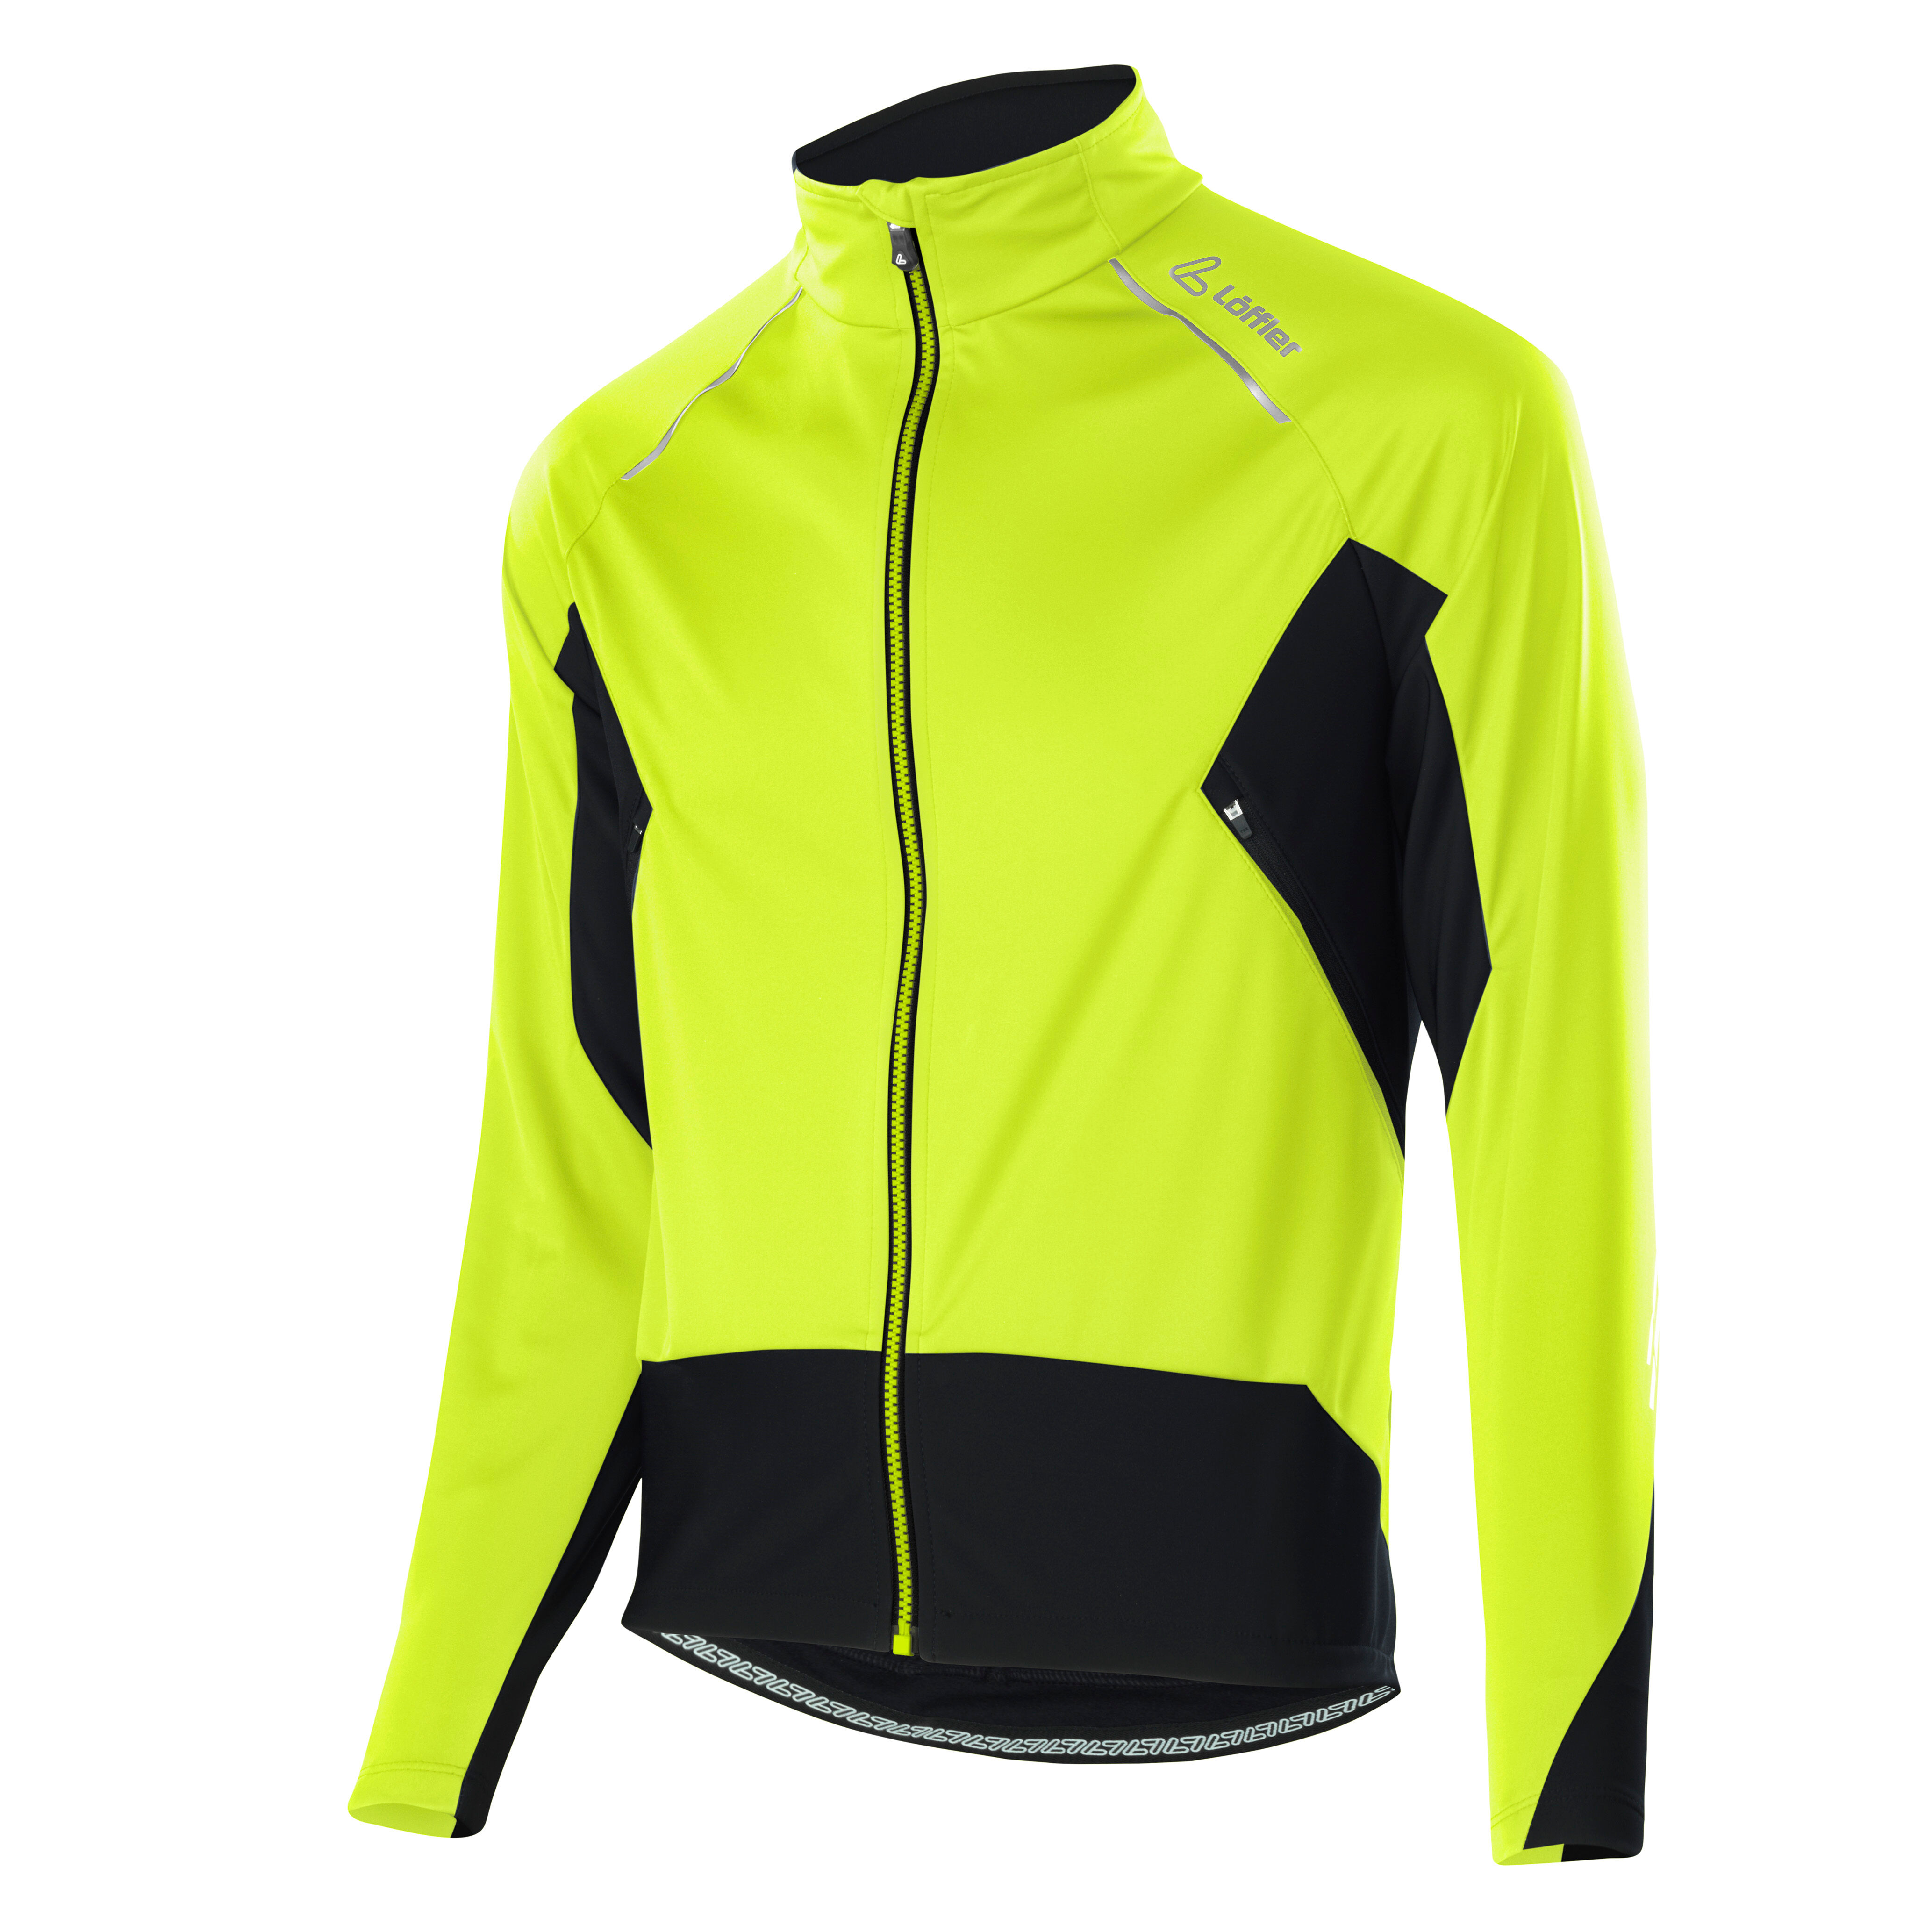 Loeffler Bike Jacket Ventsiro Ws Light - Softshell jacket - Men's